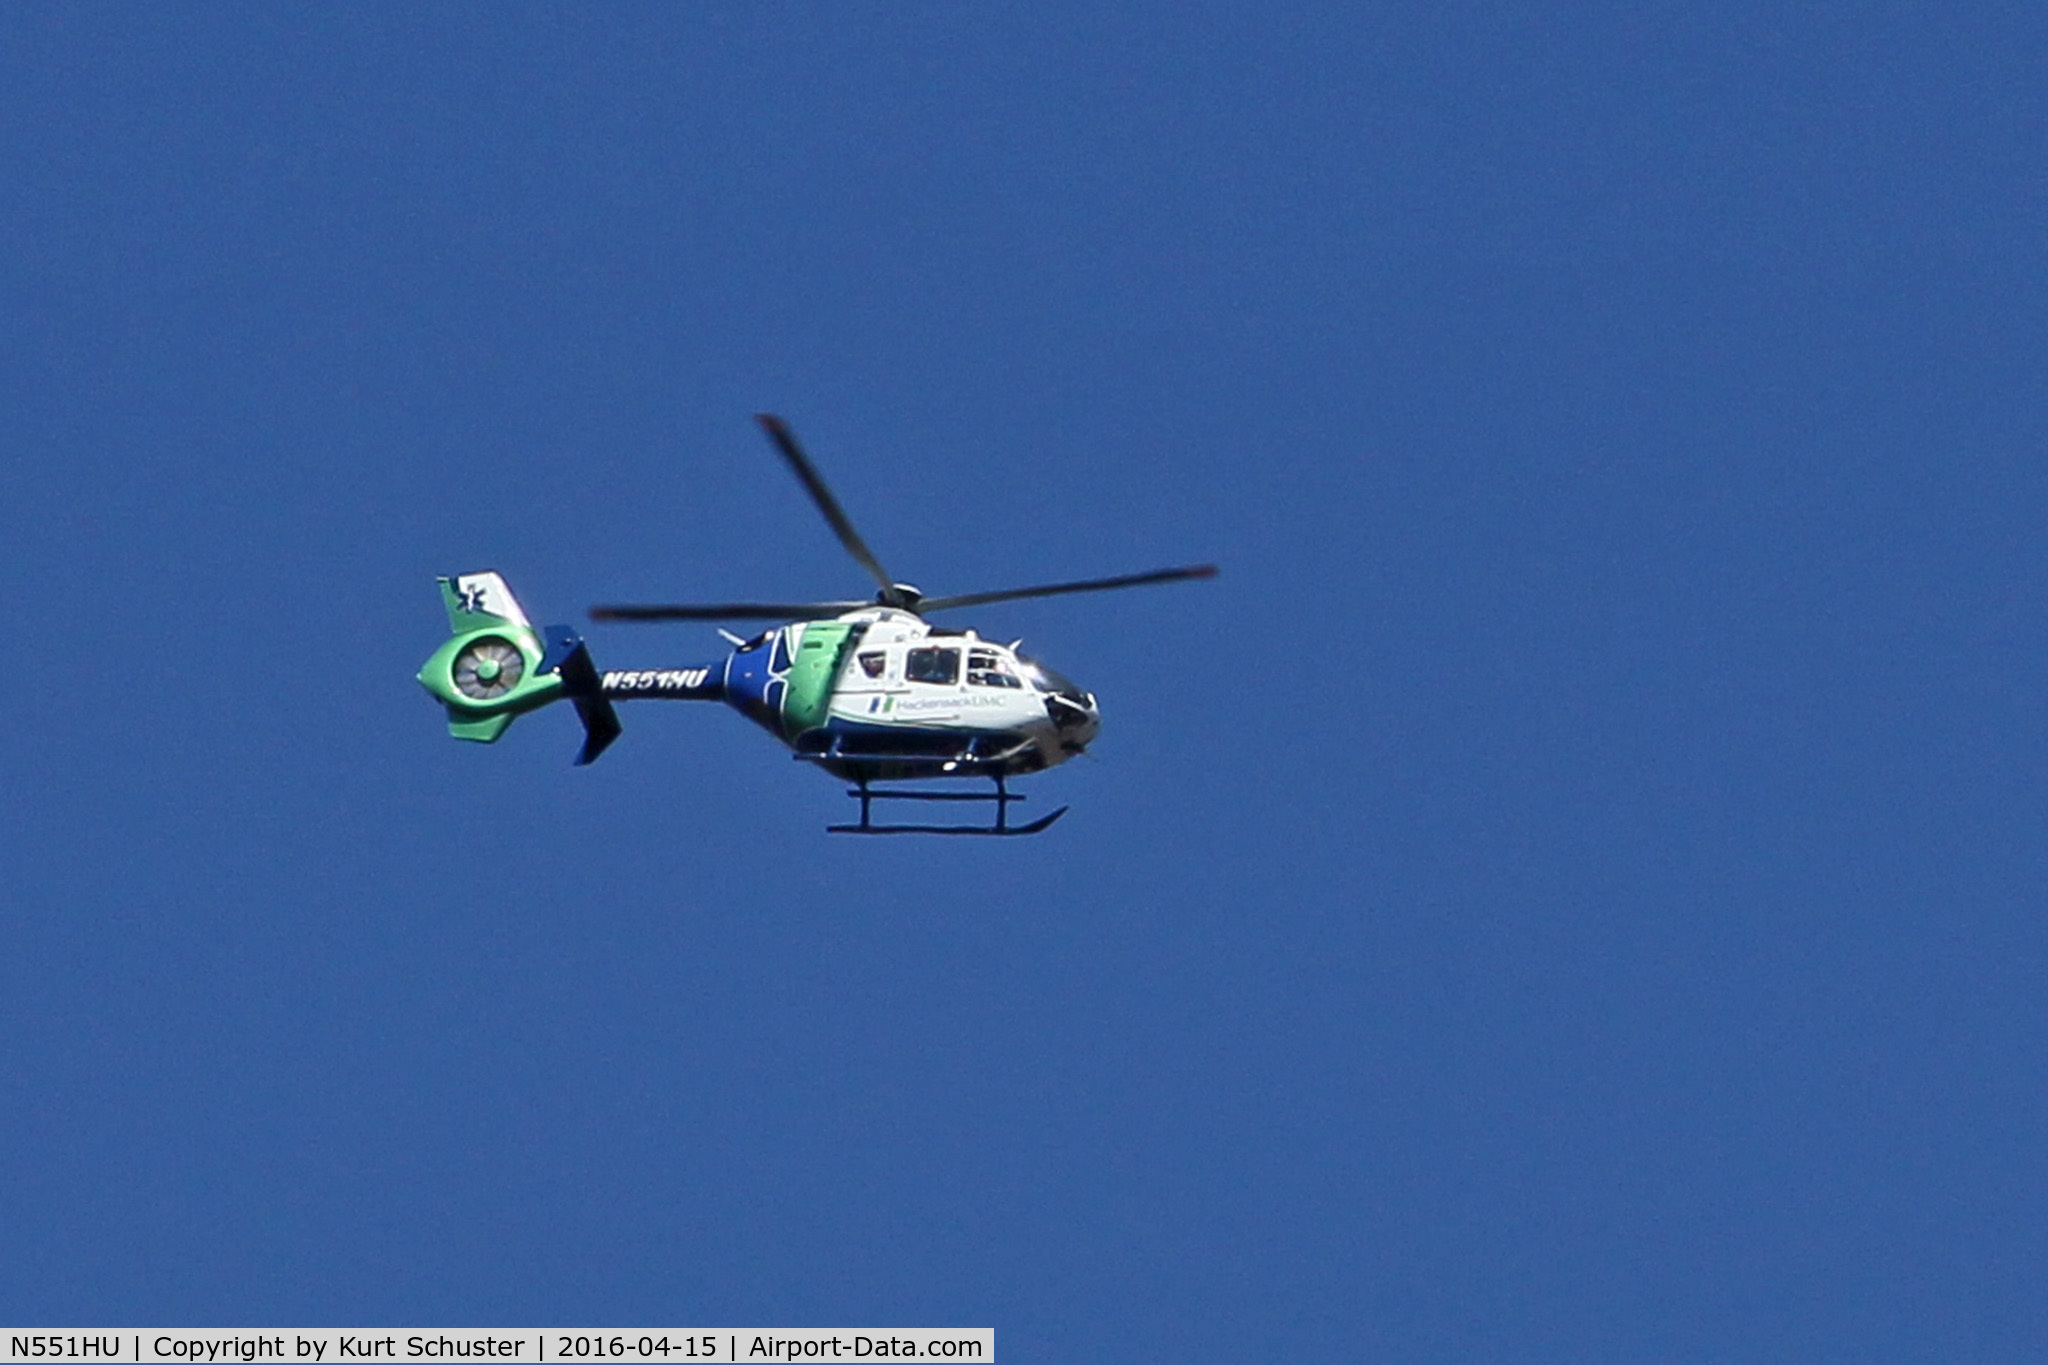 N551HU, 2006 Eurocopter EC-135P-2 C/N 0490, Hackensack University Medical Center
2006 Eurocopter EC-135P-2
on 15-Apr-2016 at approx 1500hrsEDT